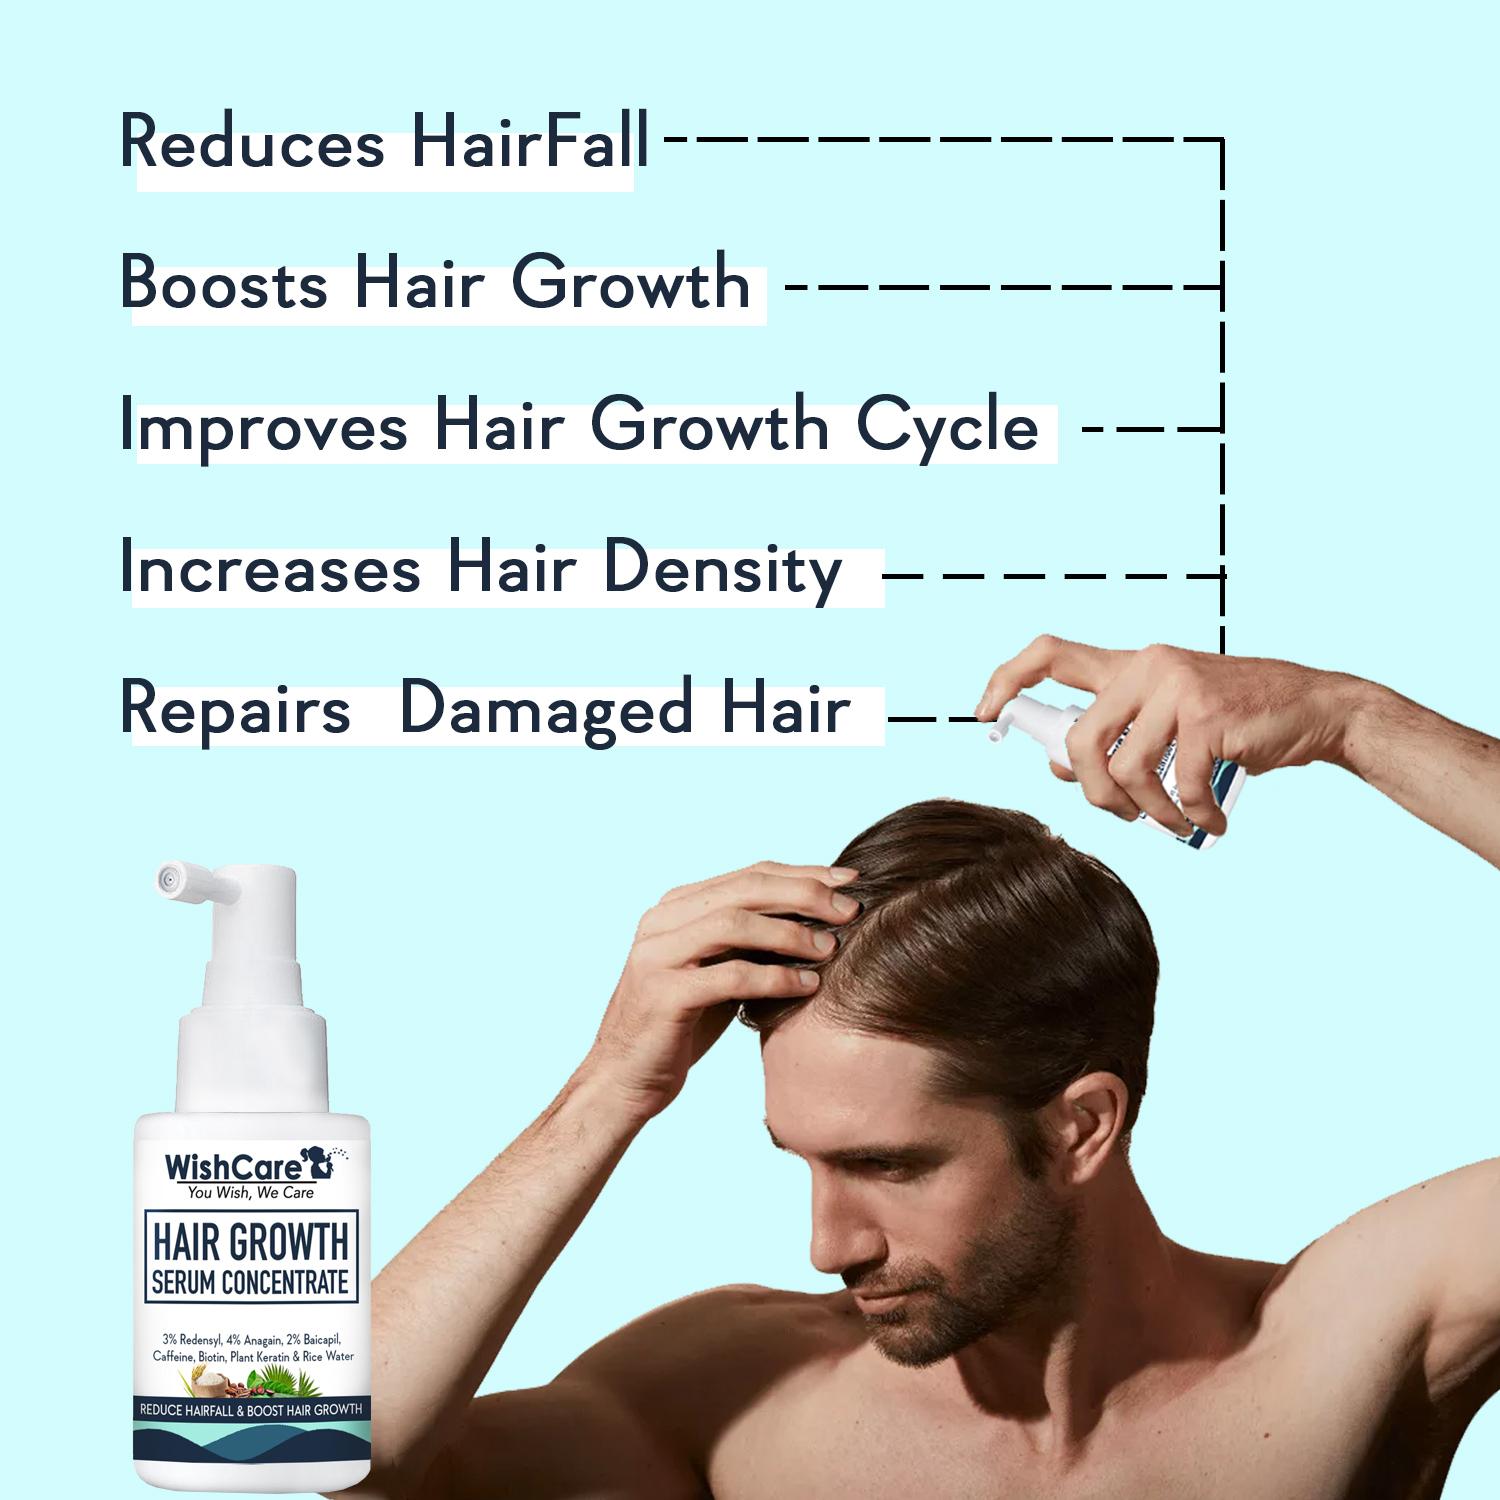 WishCare Hair Growth Serum Concentrate - 3% Resdensyl, 4% Anagain, 2%  Baicapil, Caffeine, Biotin, Plant Keratin & Rice Water (30ml) - JioMart